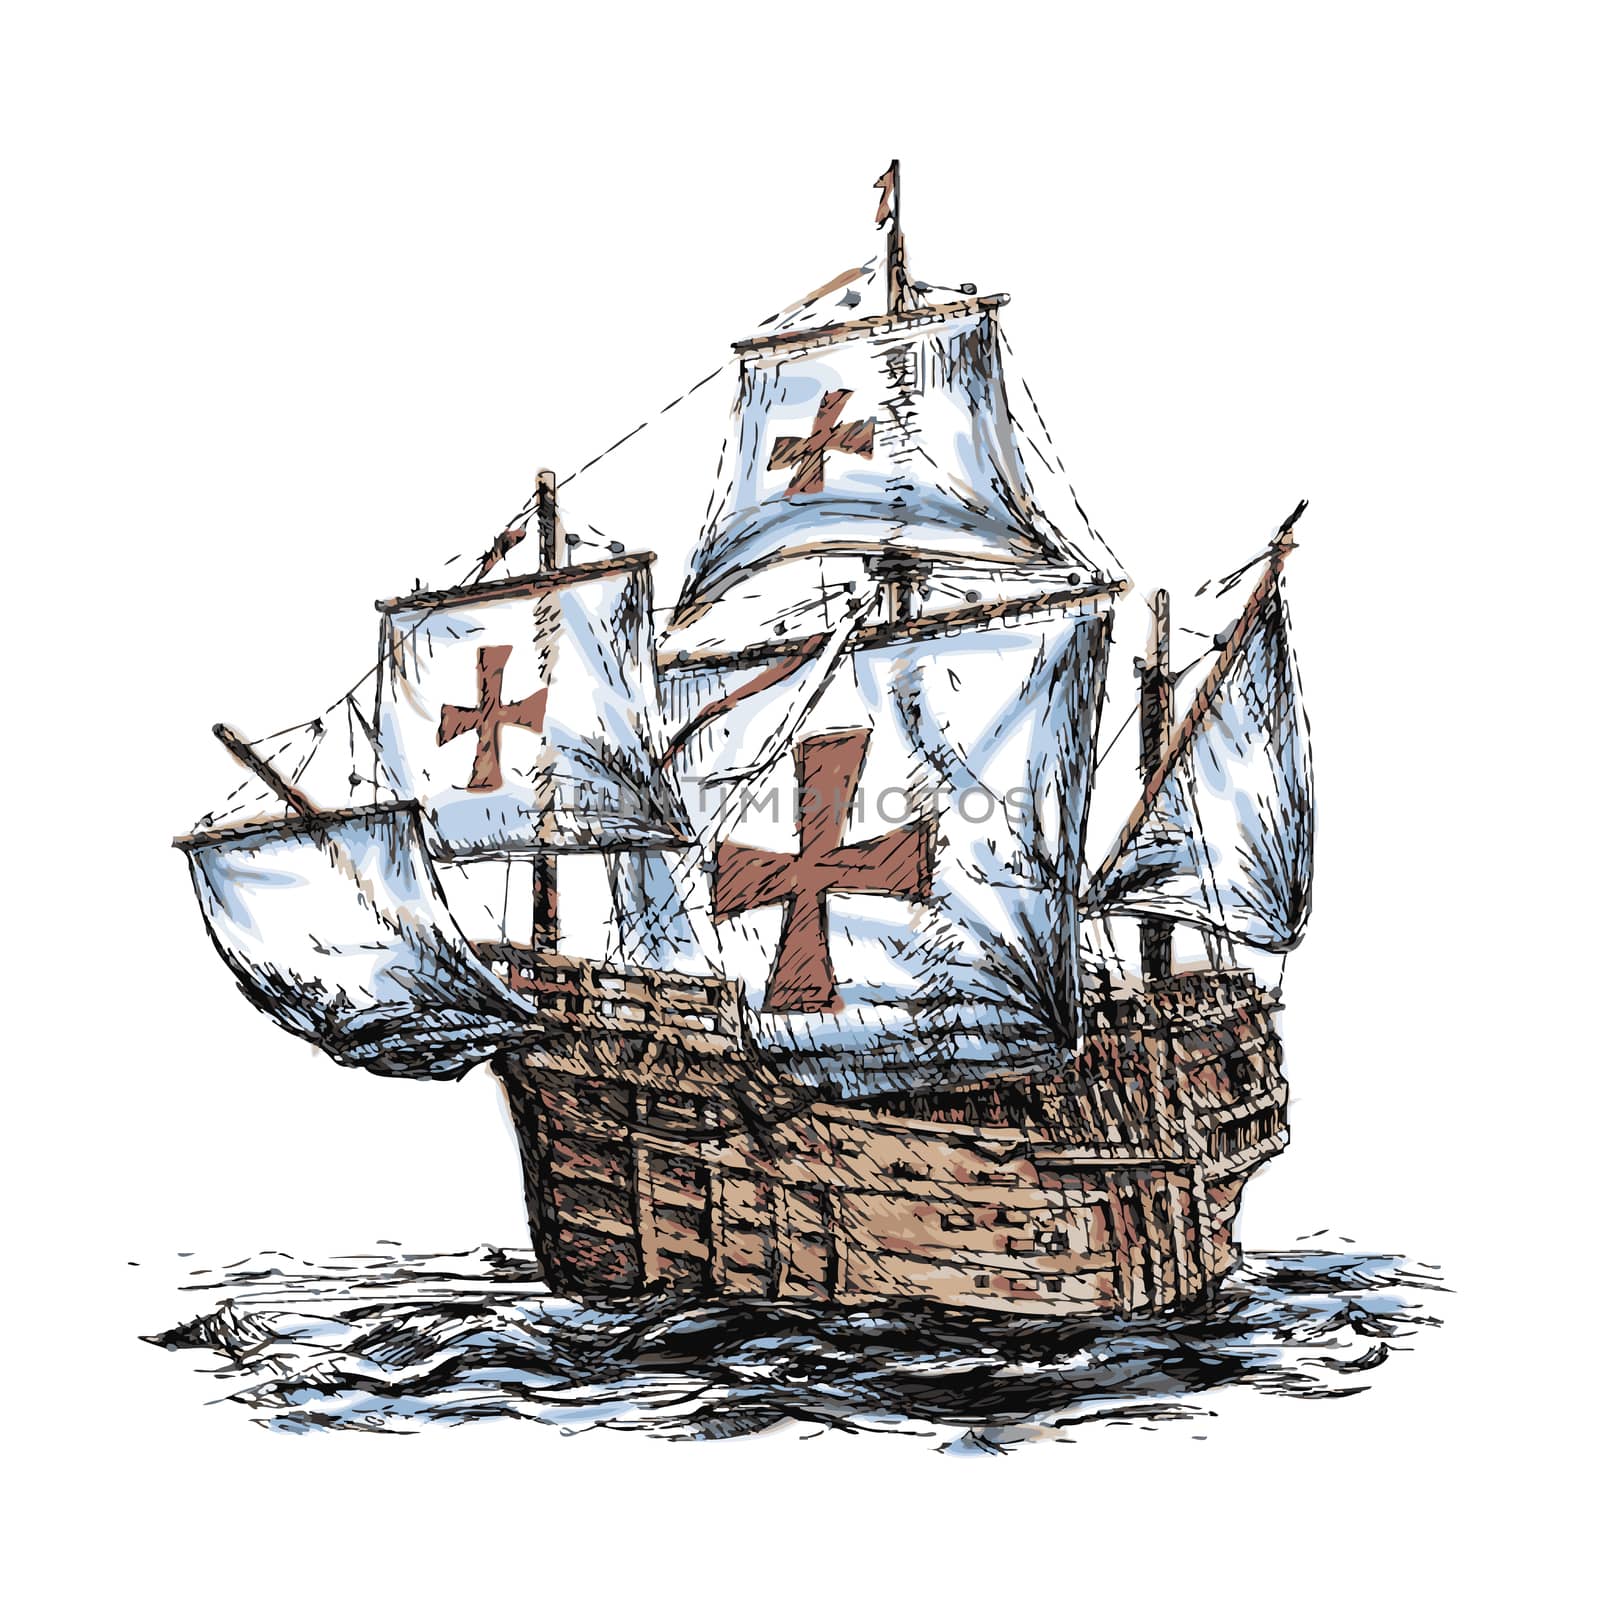 columbus ship hand drawn on white background